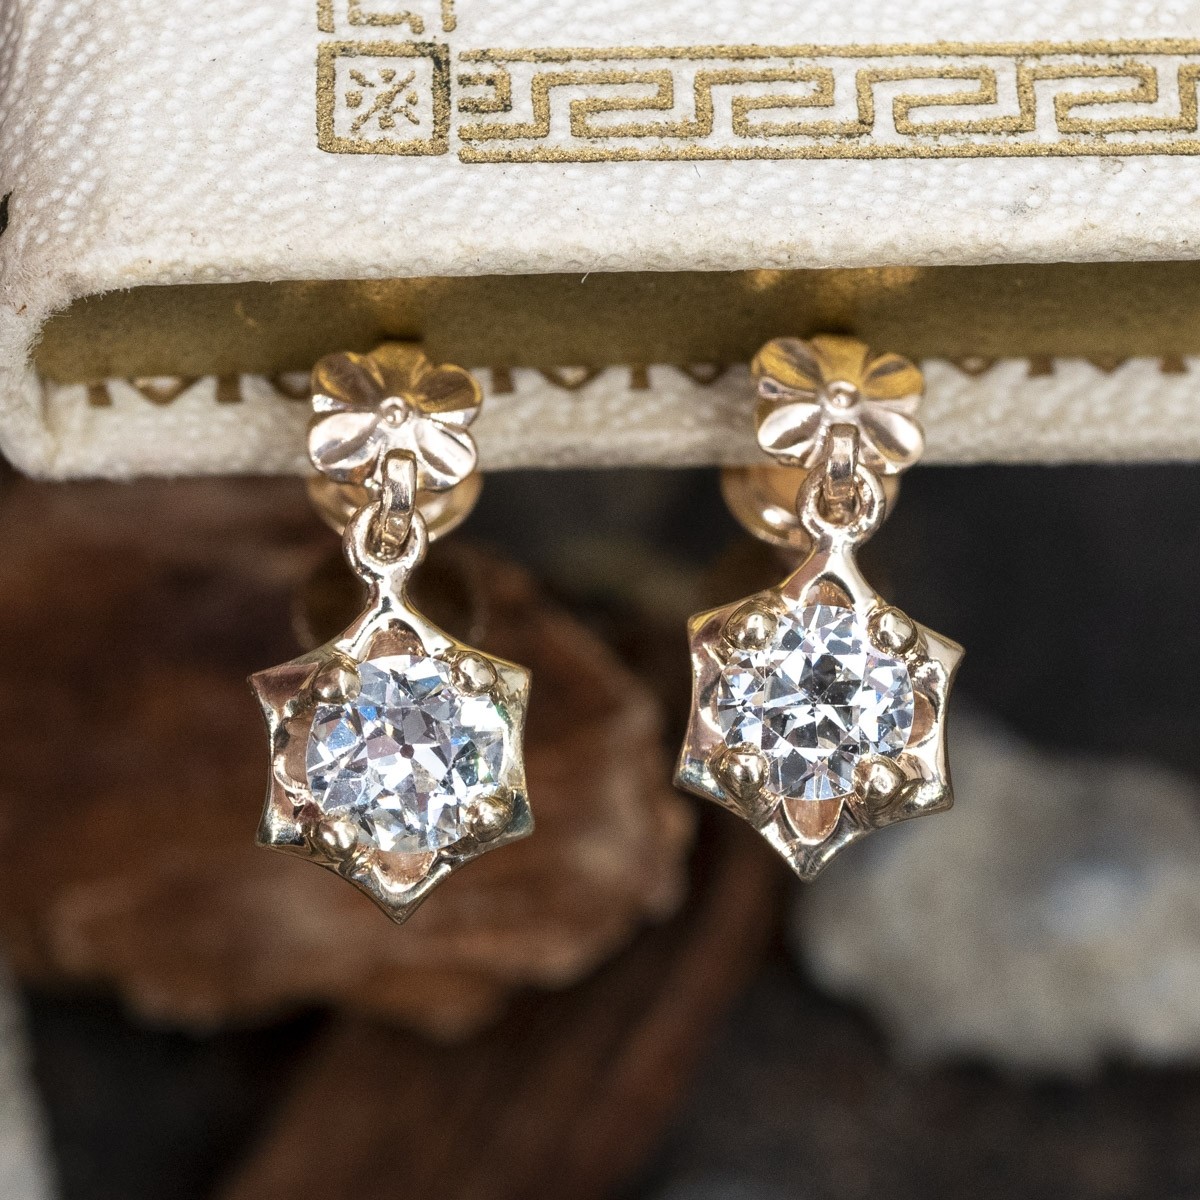 Early 20th Century Old Mine Cut Diamond Earrings – Bell and Bird